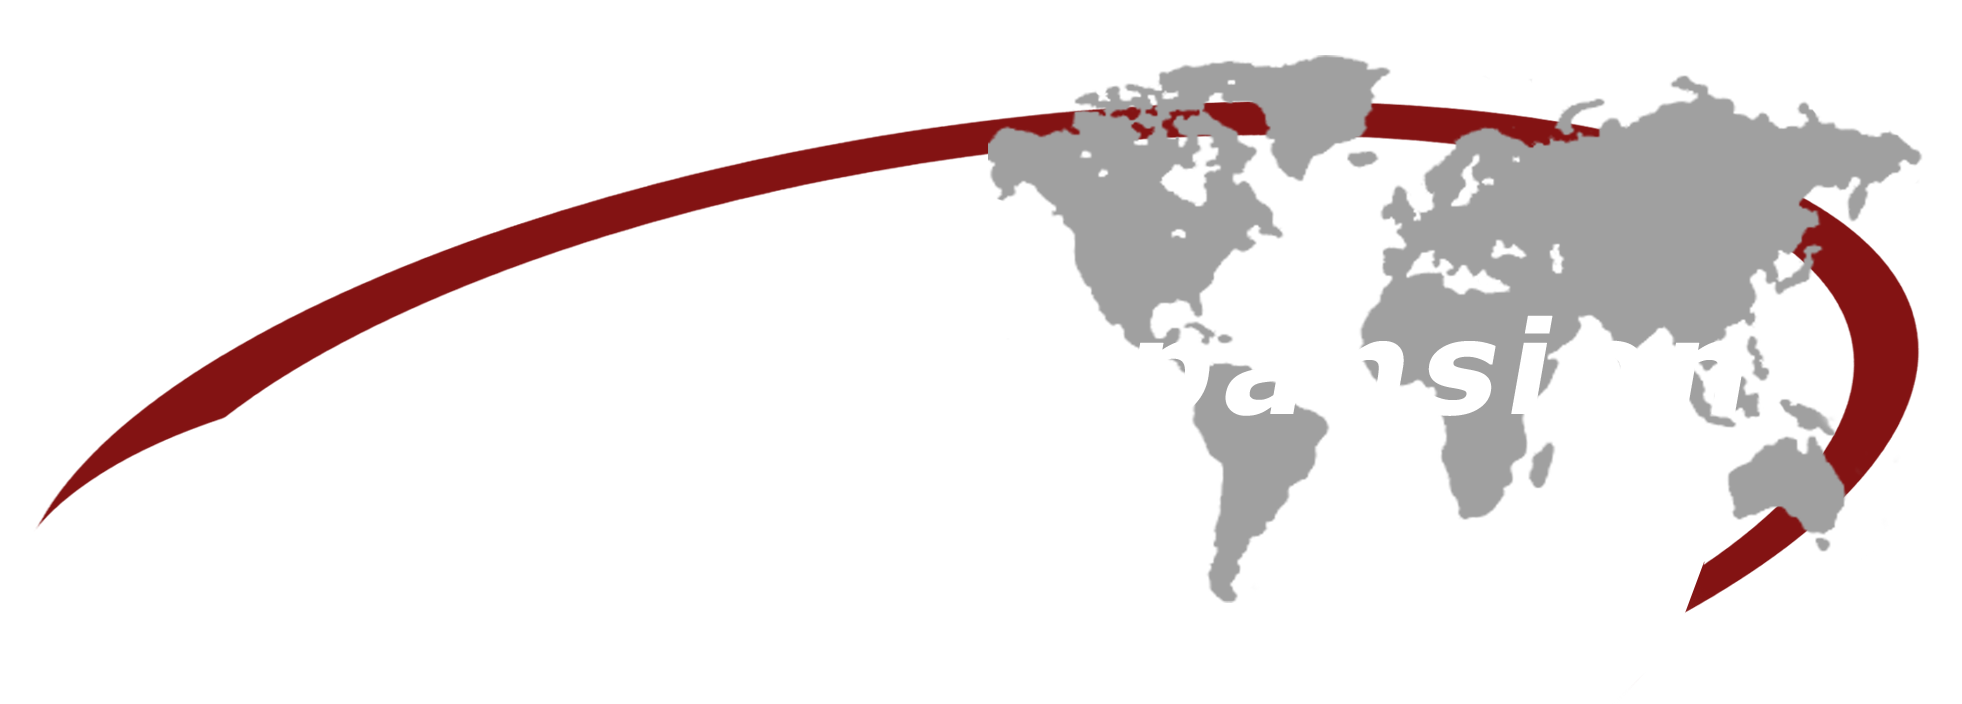 Team_expansion_logo